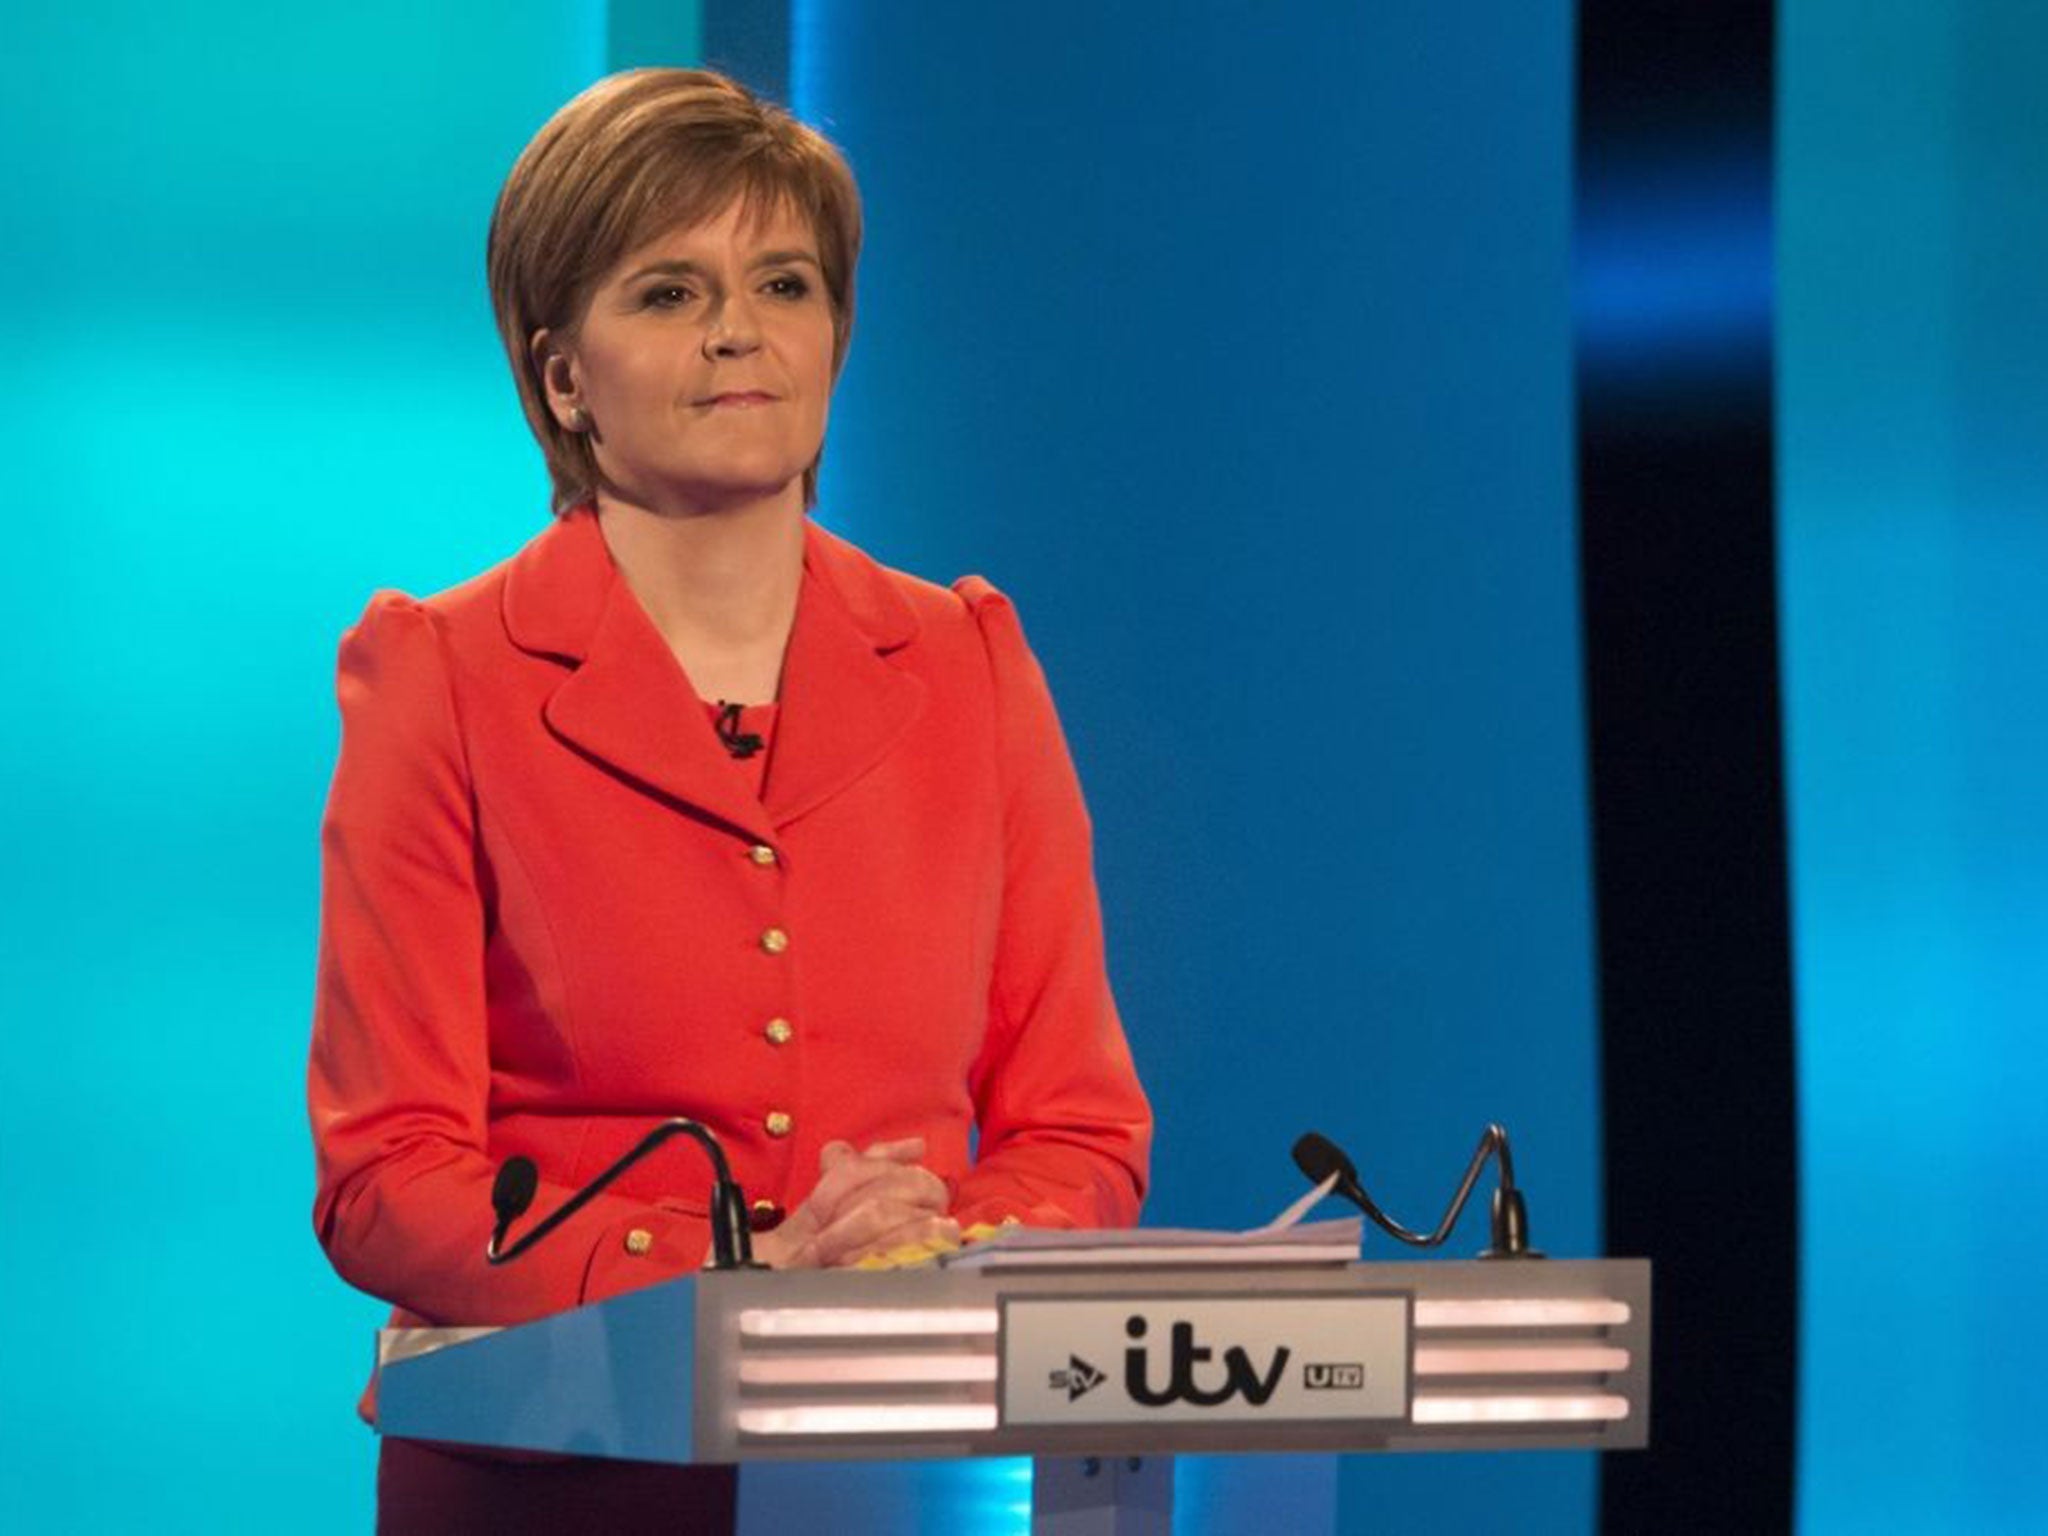 The SNP leader has dismissed the claim as '100% untrue'